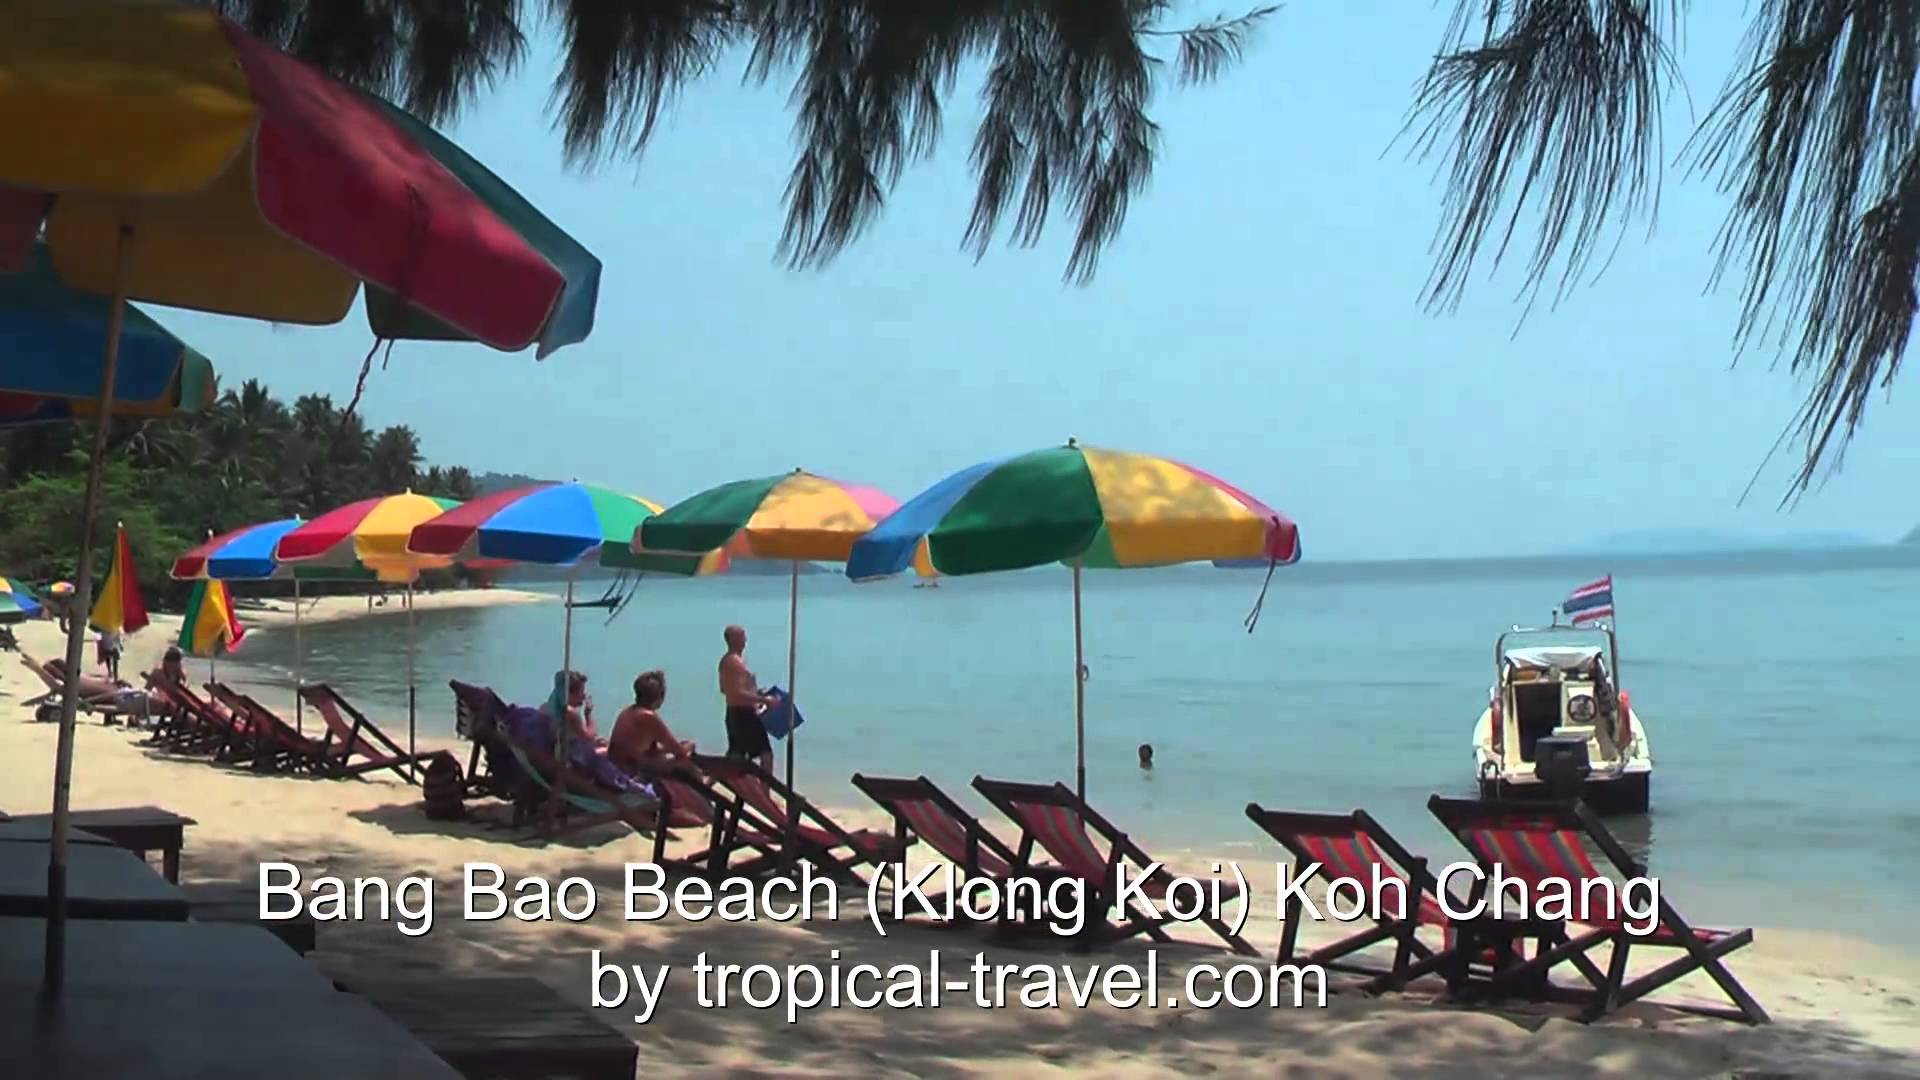 Bang Bao Beach (Klong Koi) Koh Chang (by tropical-travel.com) - YouTube